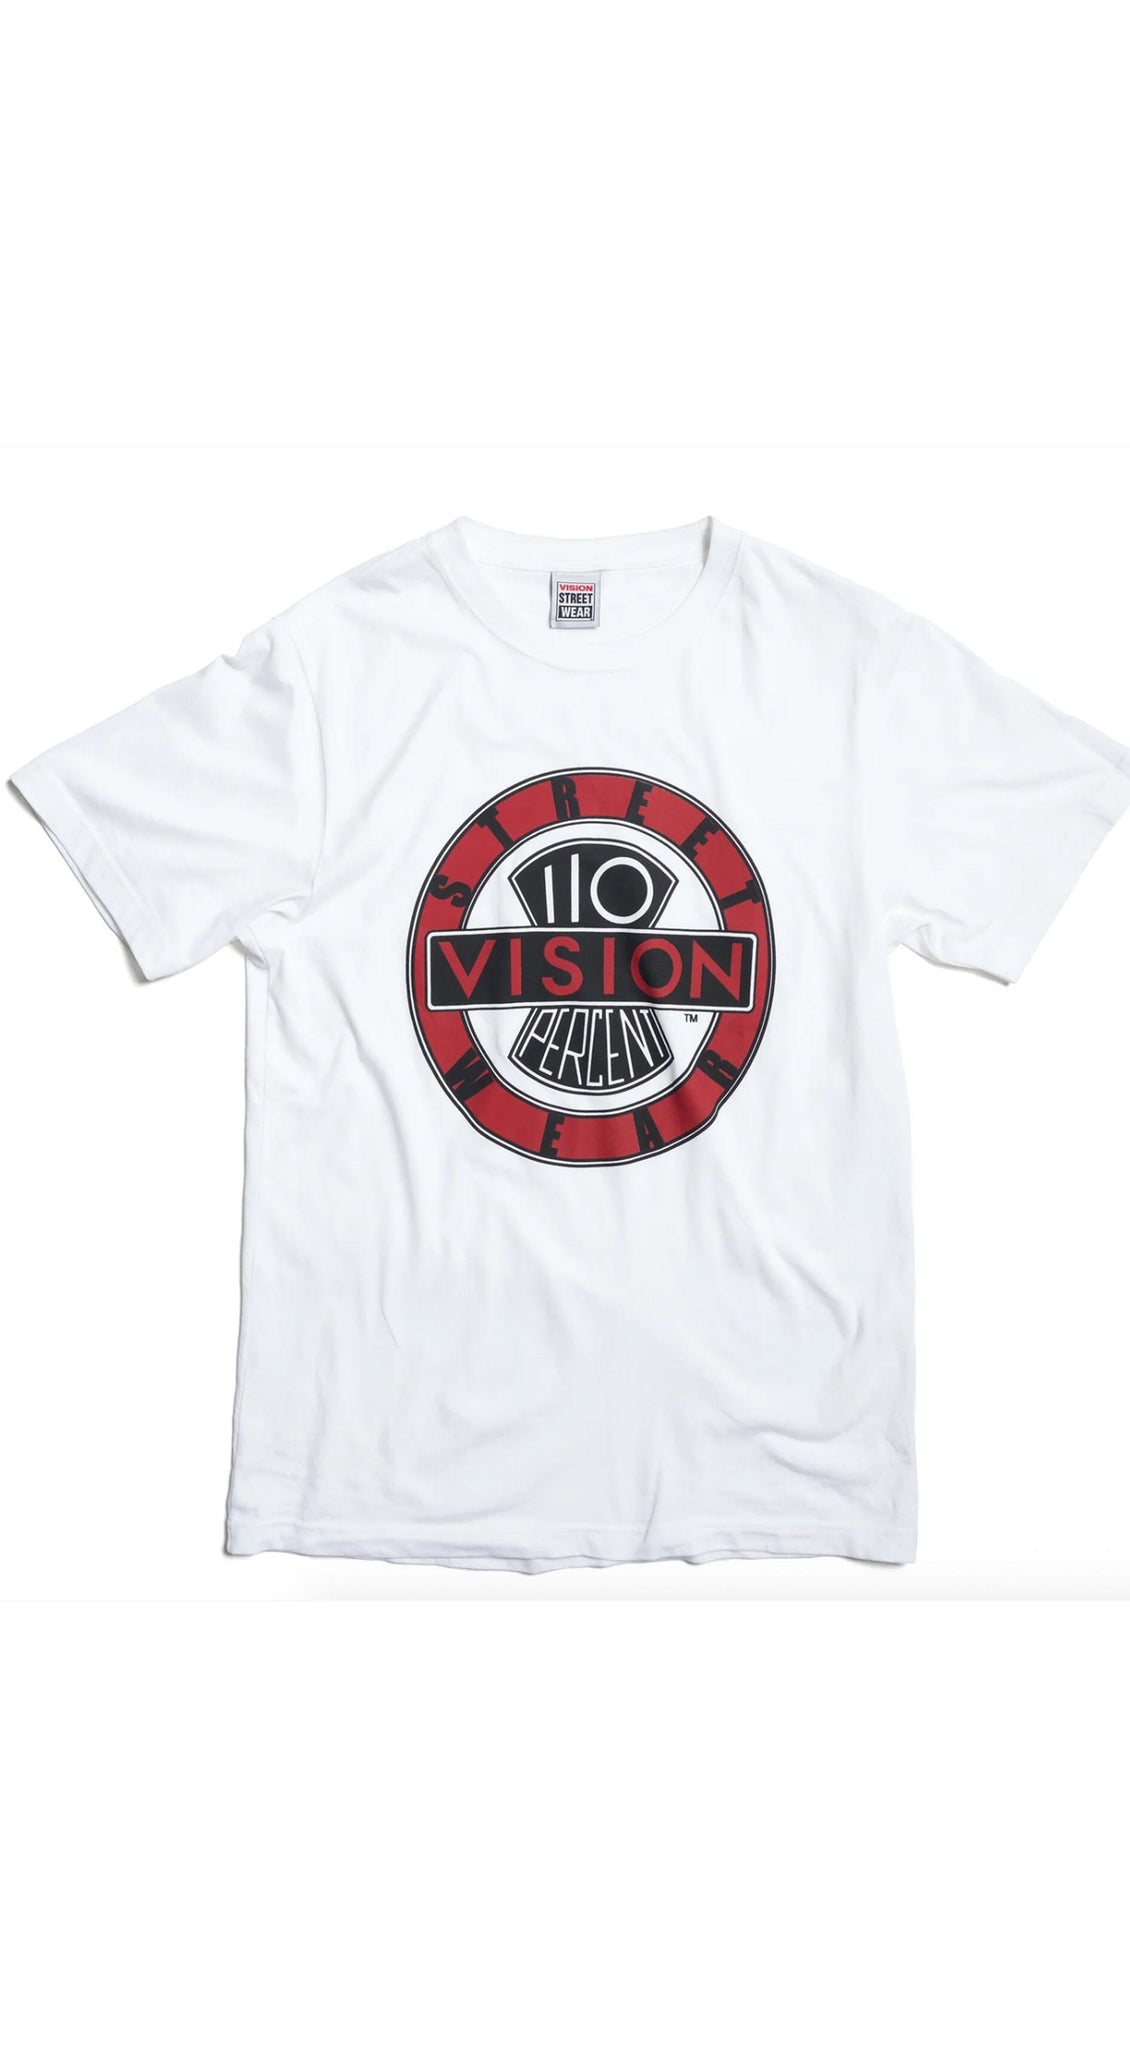 Vision Street Wear 110% S/S Black T-shirt - Camiseta Ropa Vision Skateboards 